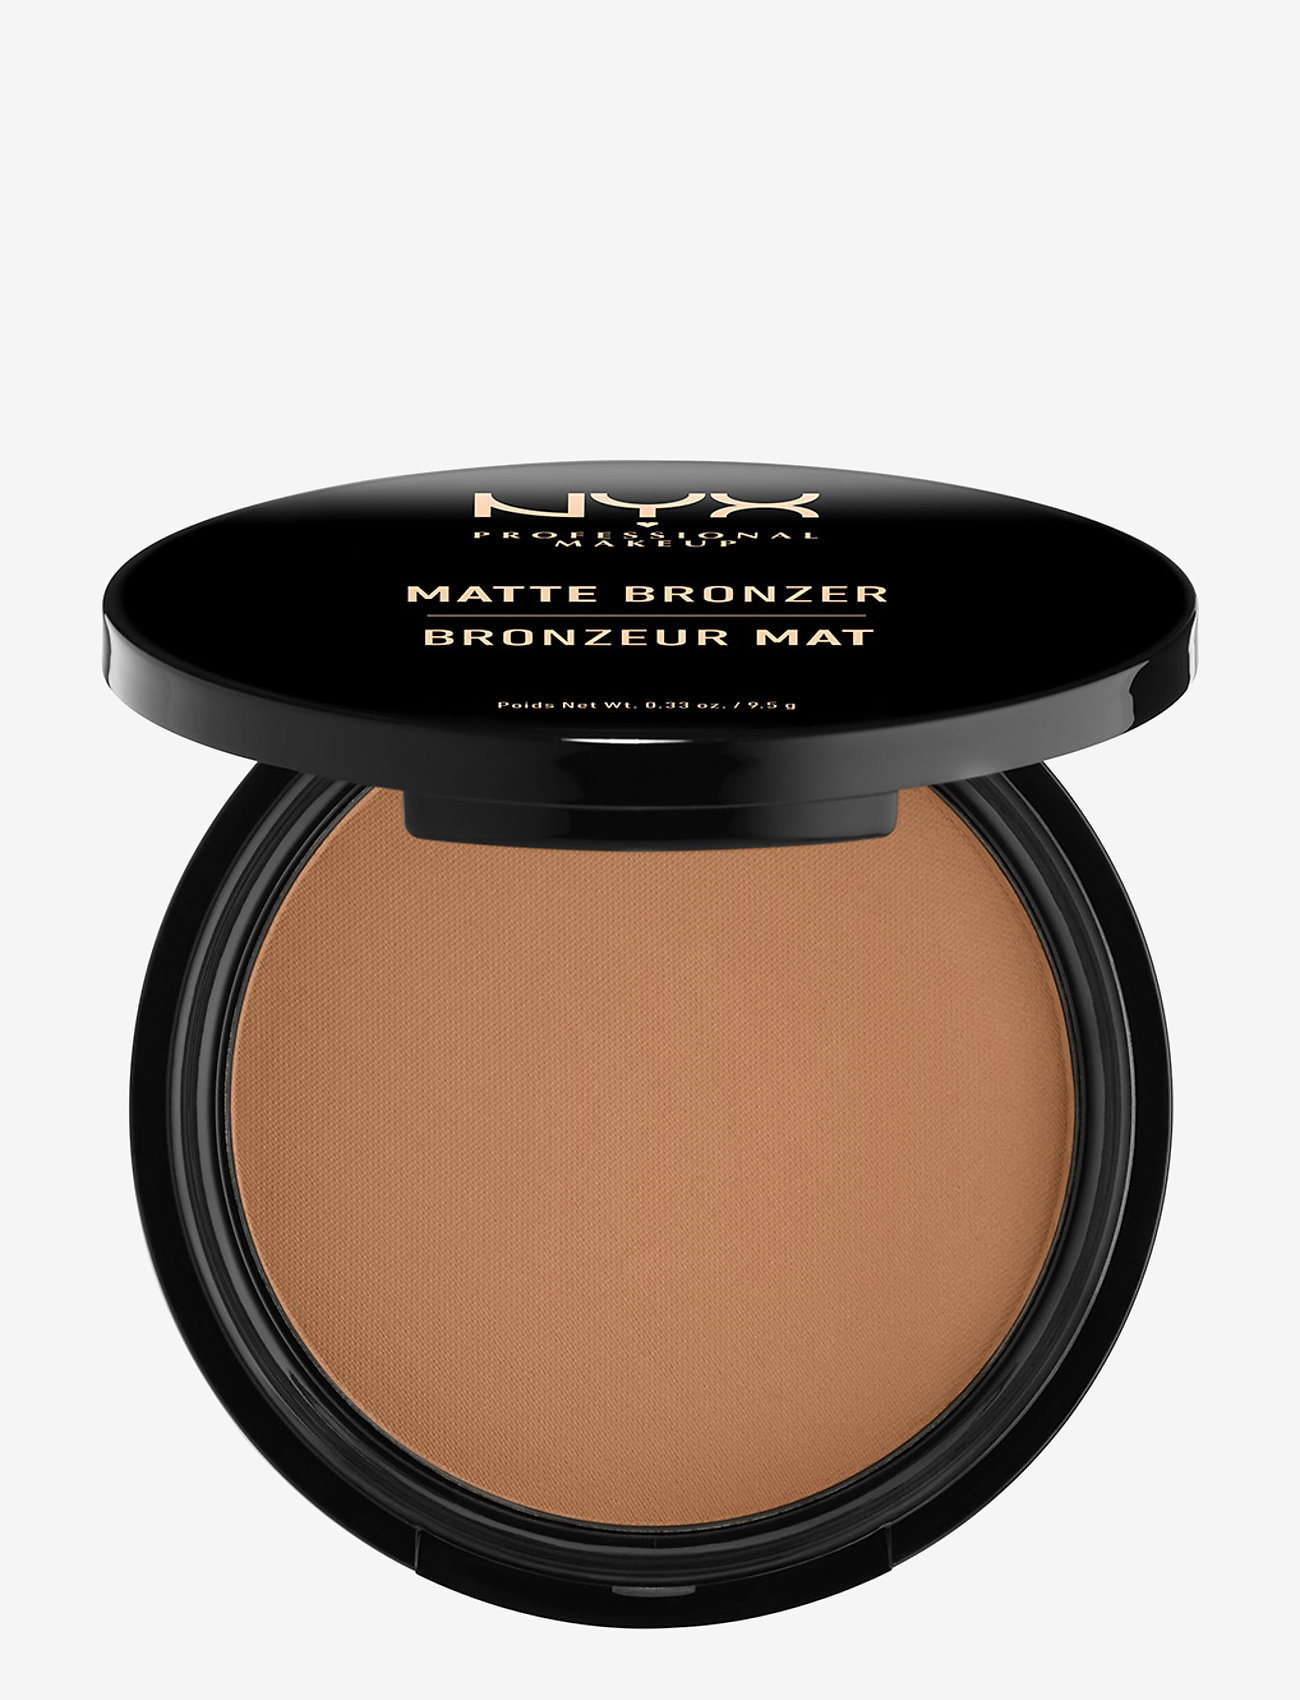 NYX Professional Makeup - MATTE BODY BRONZER - aurinkopuuterit - deep tan - 0